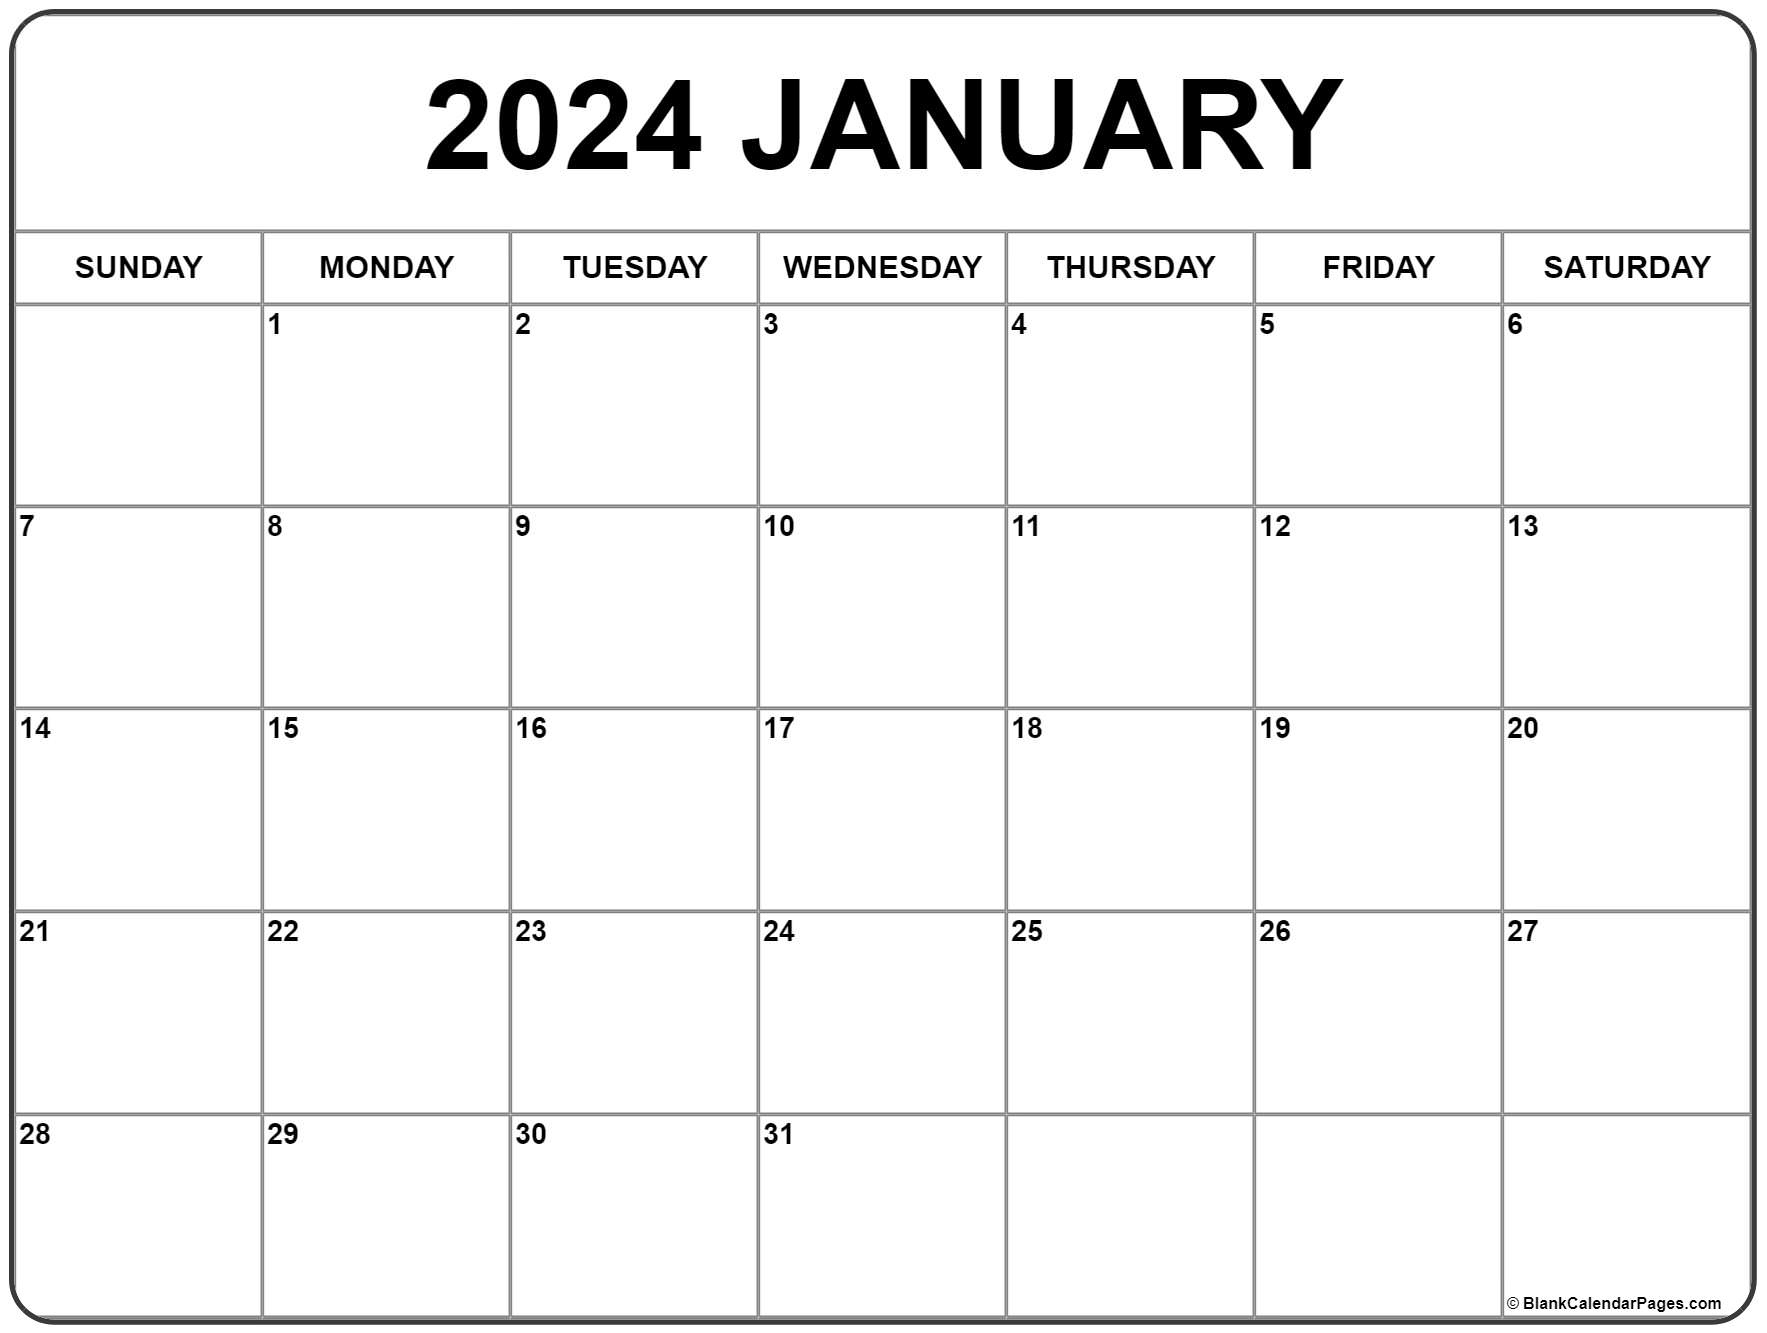 January 2024 Calendar | Free Printable Calendar | January 2024 Calendar